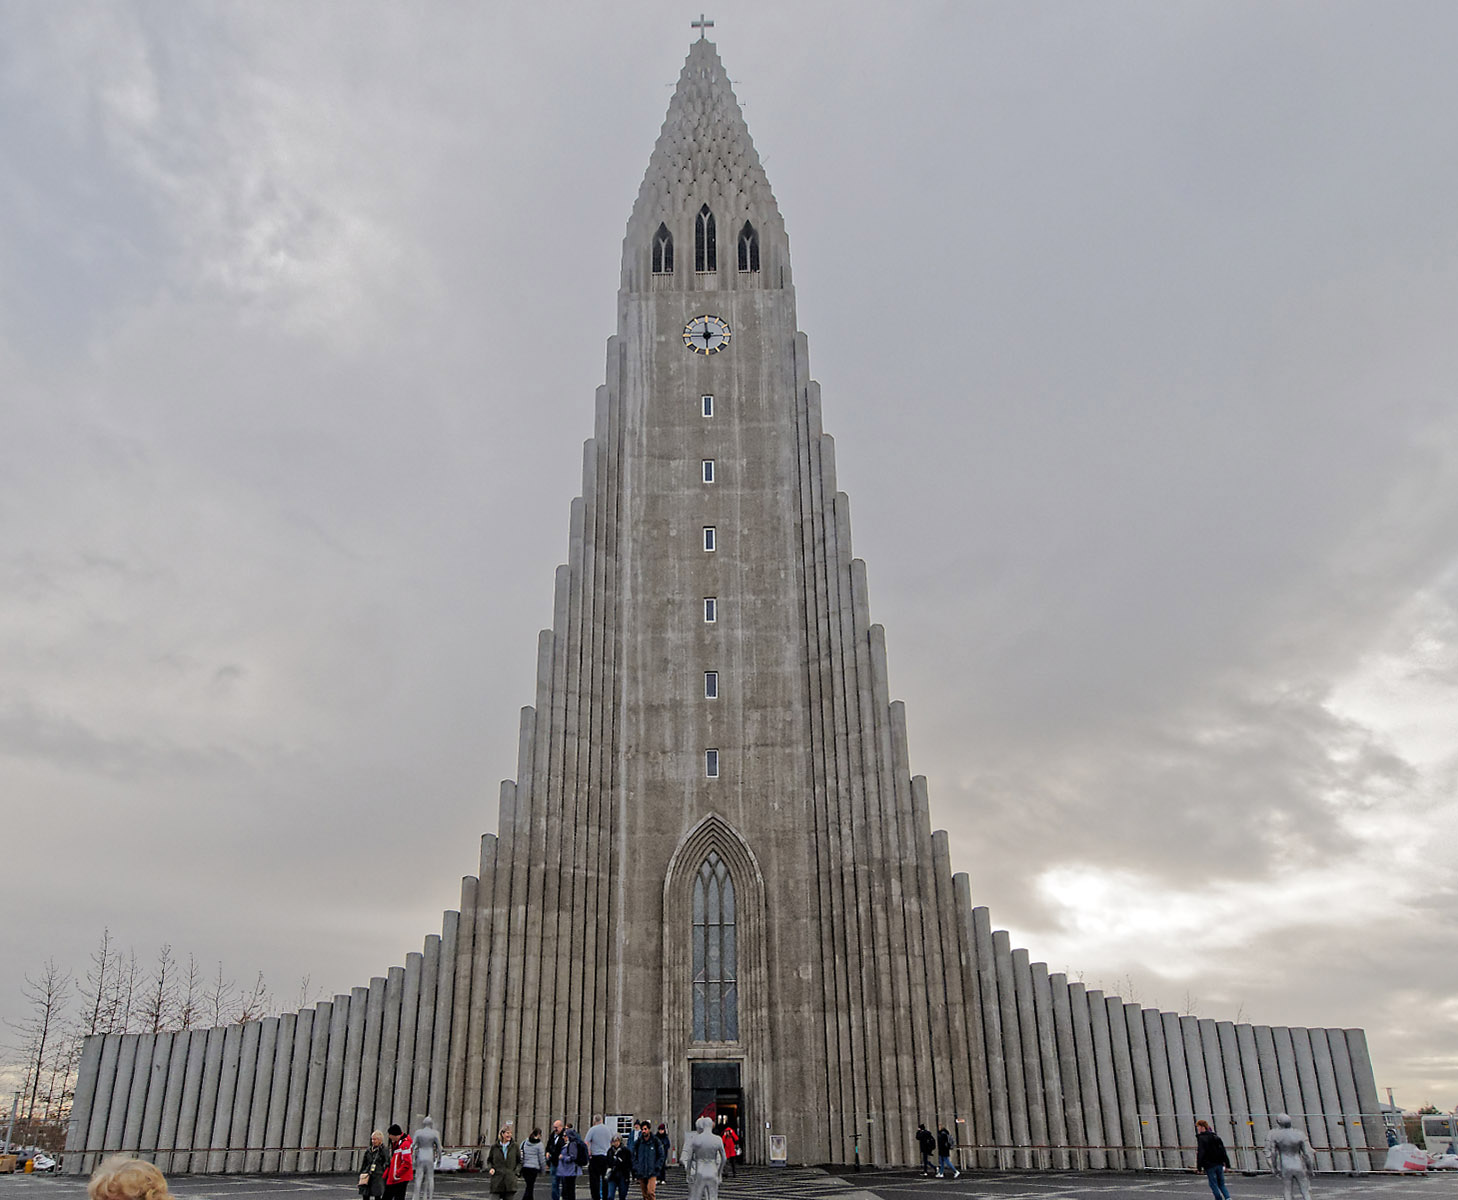 Hallrimskirkja, evangelical Lutheran National Church designed by Guðjón Samúelsson and consecrated in 1986. Design mimicks columnar basalt arrays in many volcanic sites of Iceland.